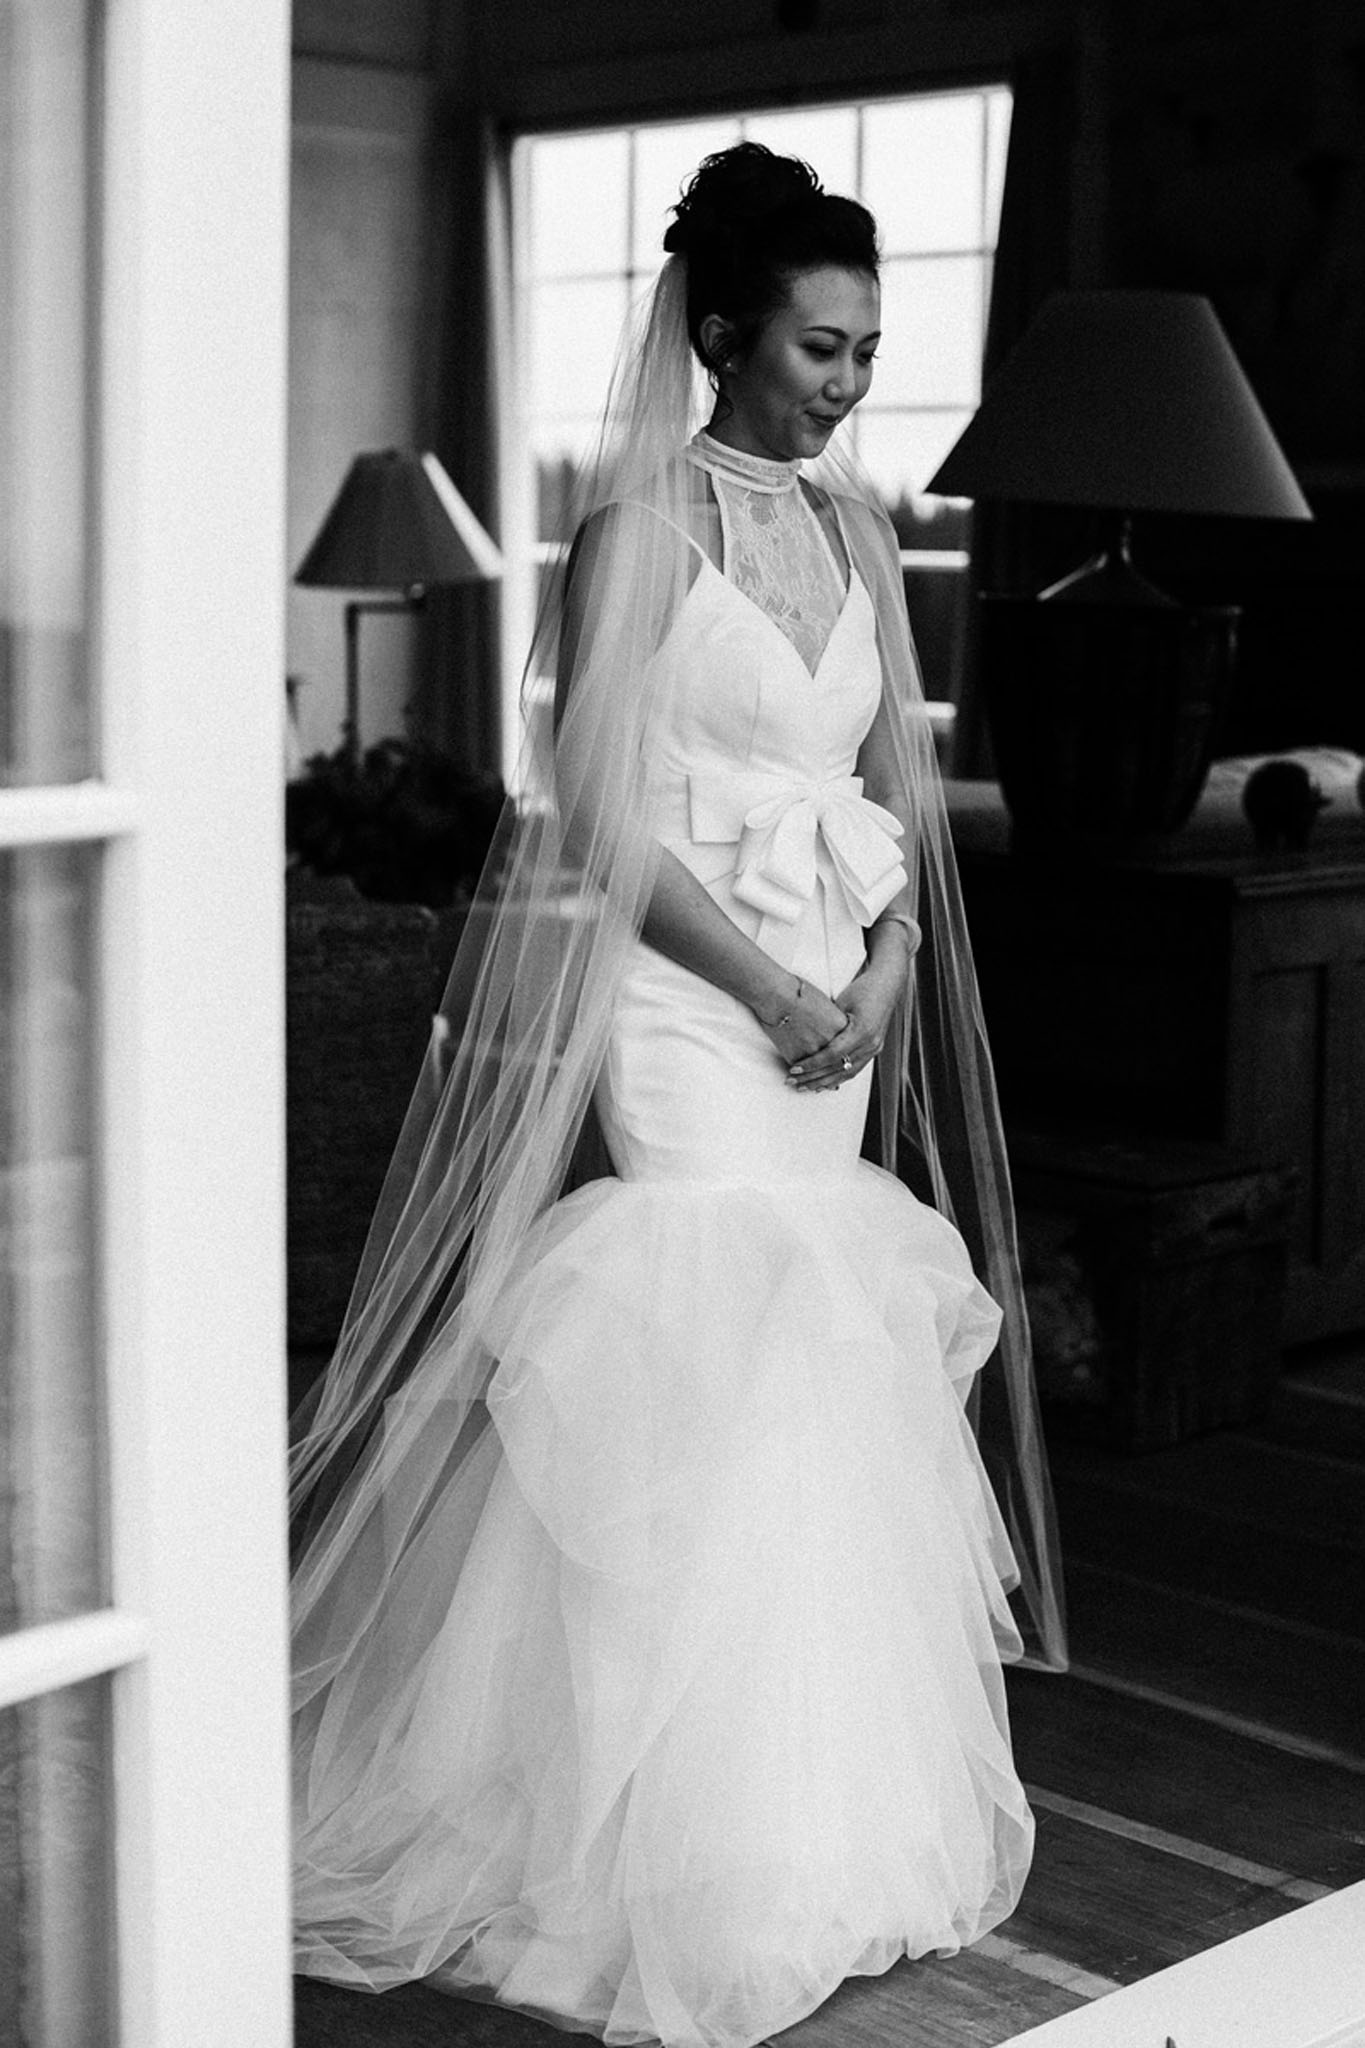 Melissa+Sean Hera Couture Wedding Dress Lace Bow Veil B&W Resized 0114